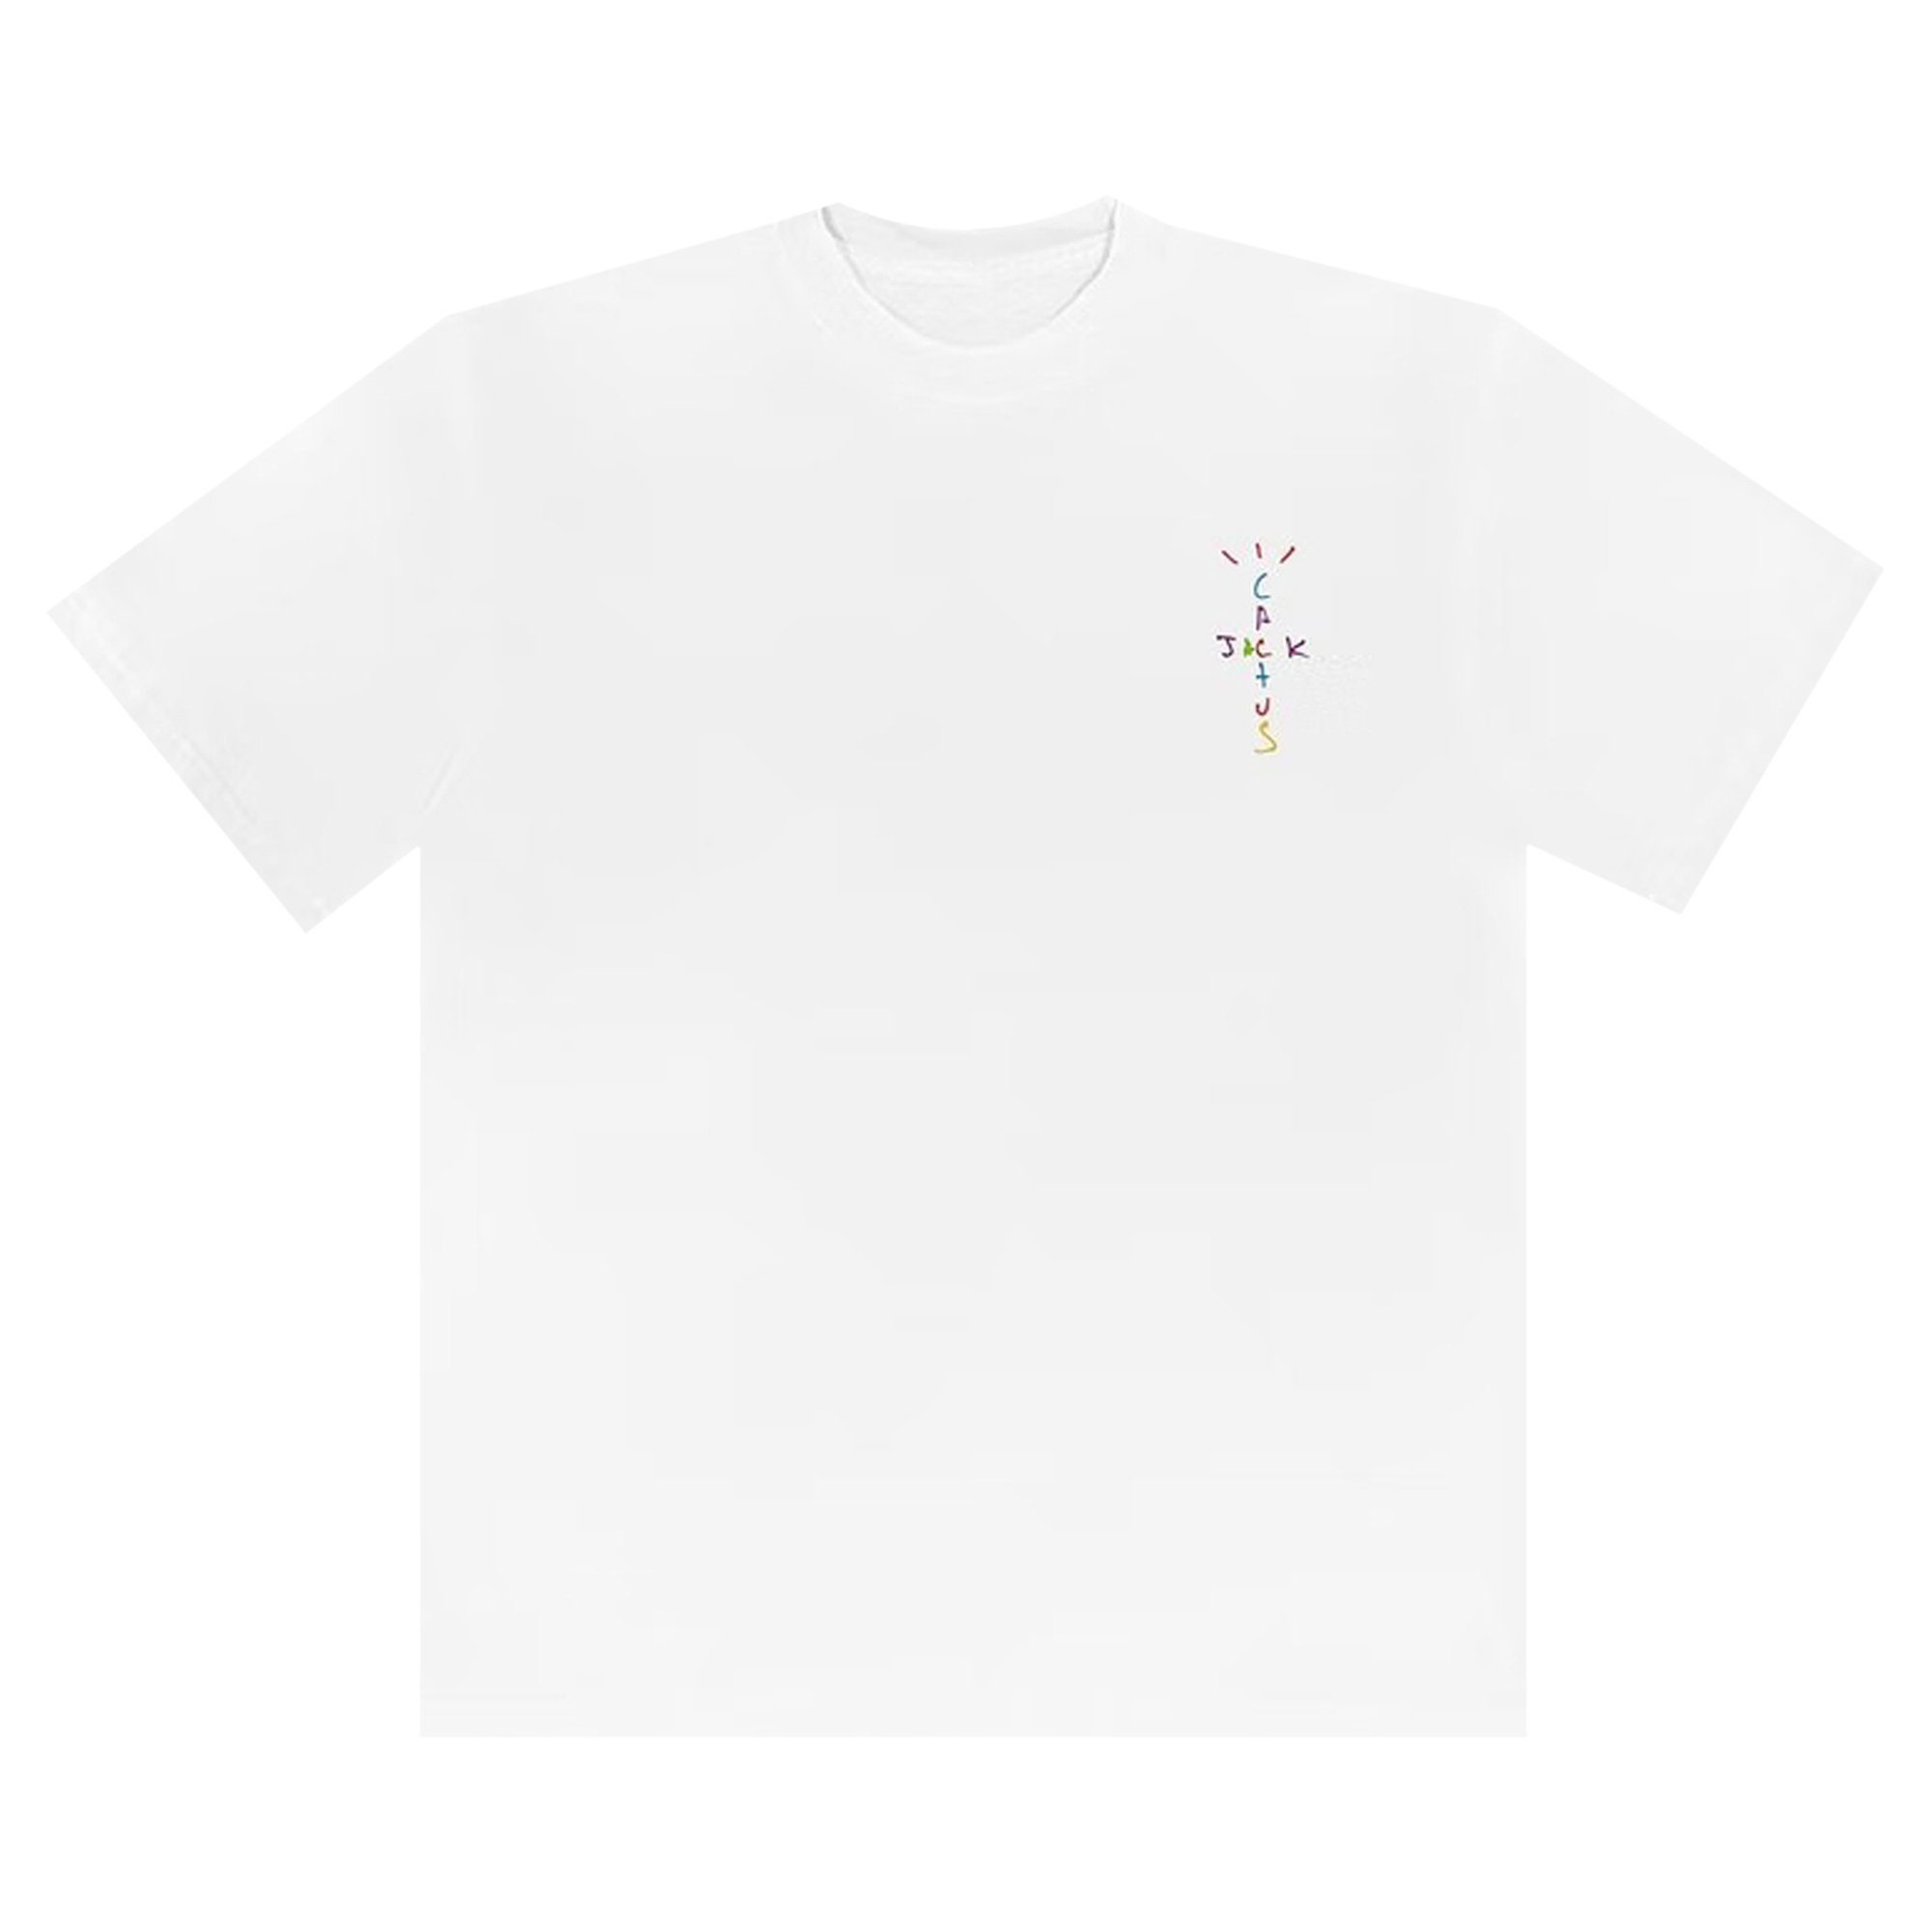 Buy Cactus Jack by Travis Scott x McDonald's Smile T-Shirt 'White